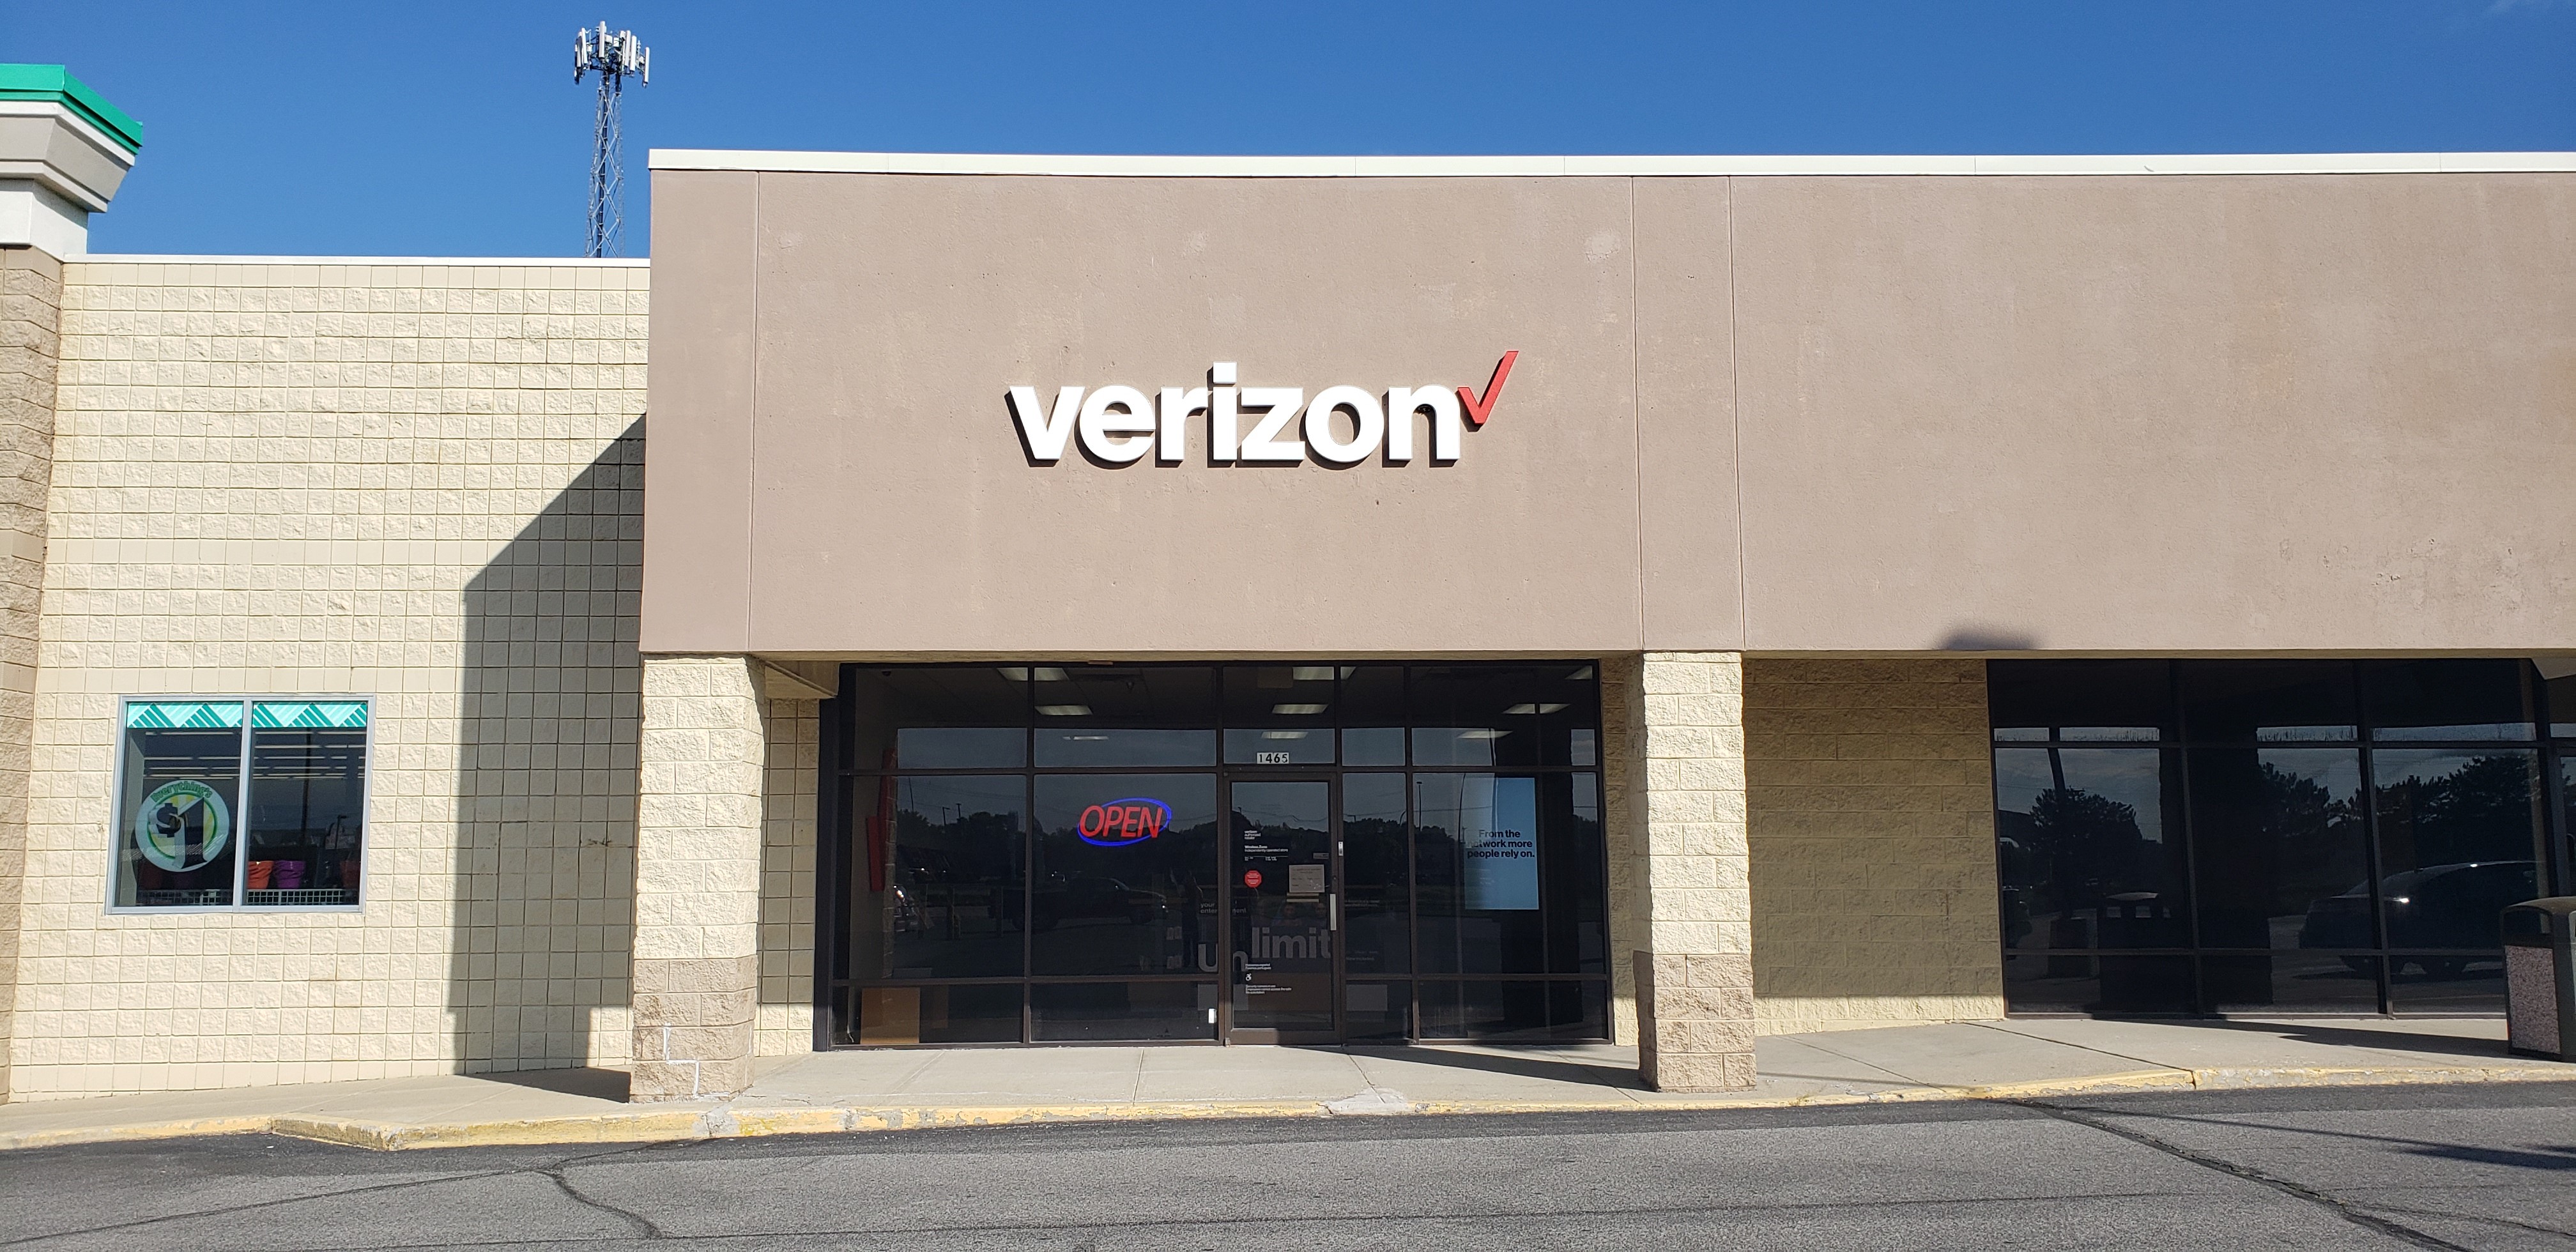 Wireless Zone® of Wabash, Verizon Authorized Retailer
1465 North Cass Street
Wabash, IN